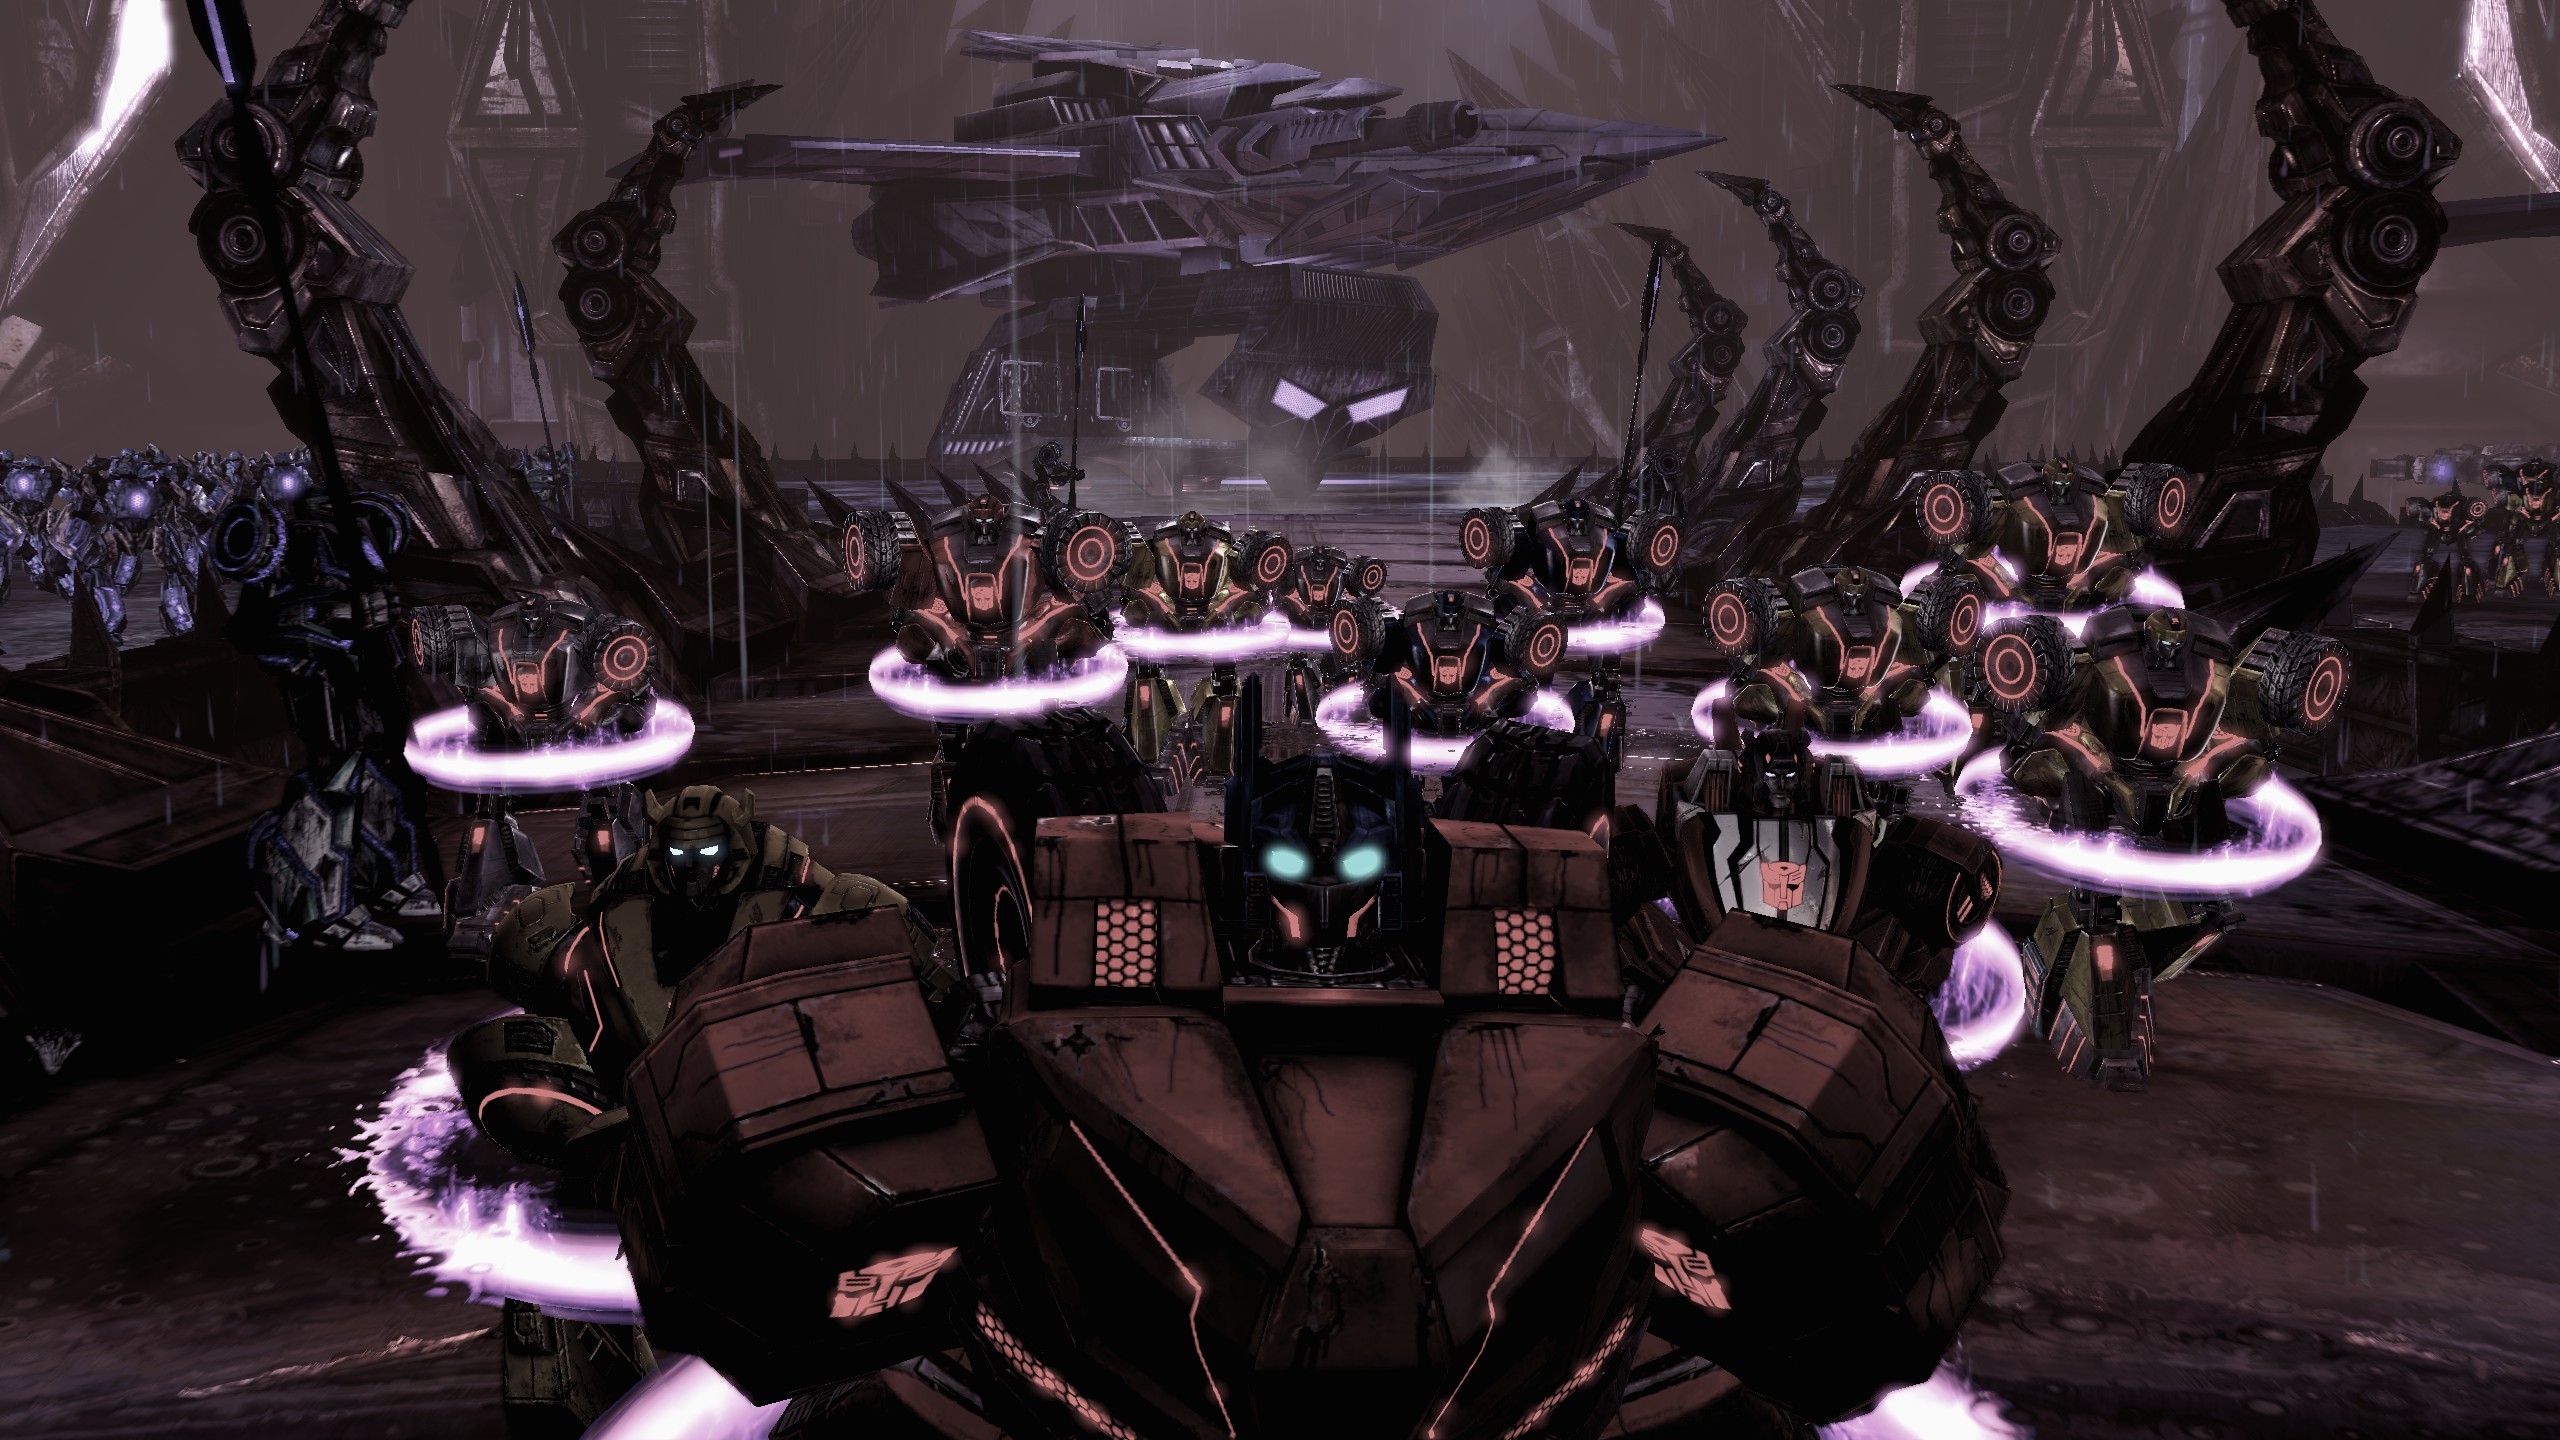 Transformers WFC | Optimus Prime,Bumblebee and Sideswipe Wallpaper by DarkVadorDylan